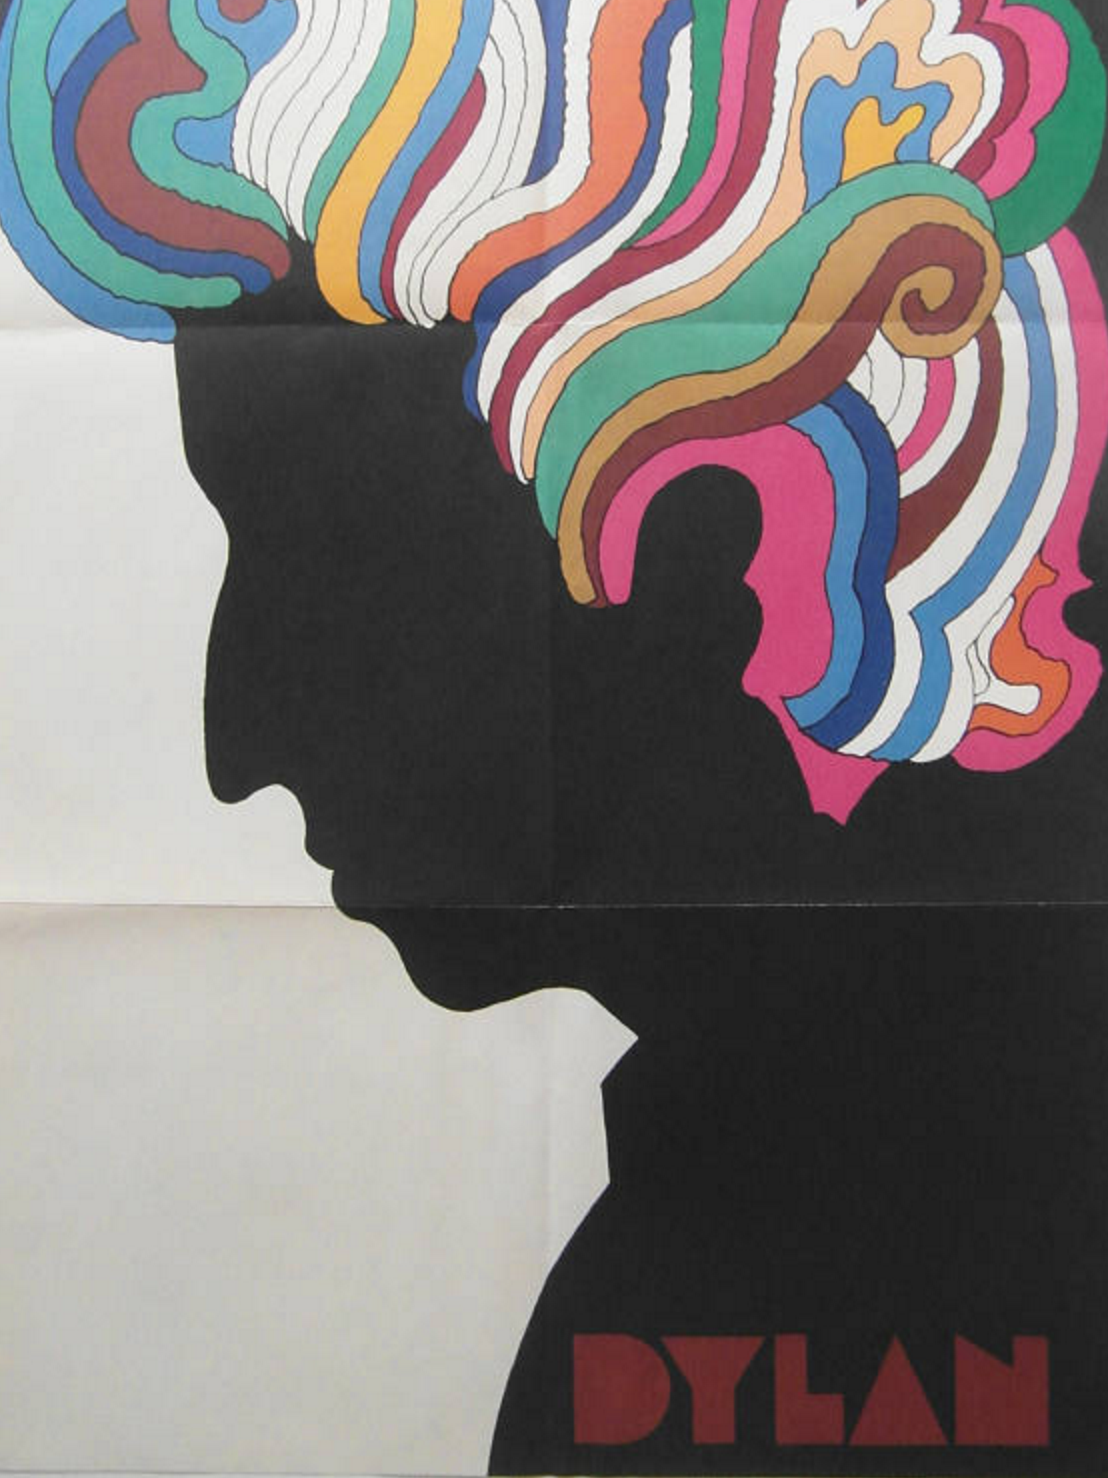 Original 1966 First Printing Bob Dylan Poster by Milton Glaser